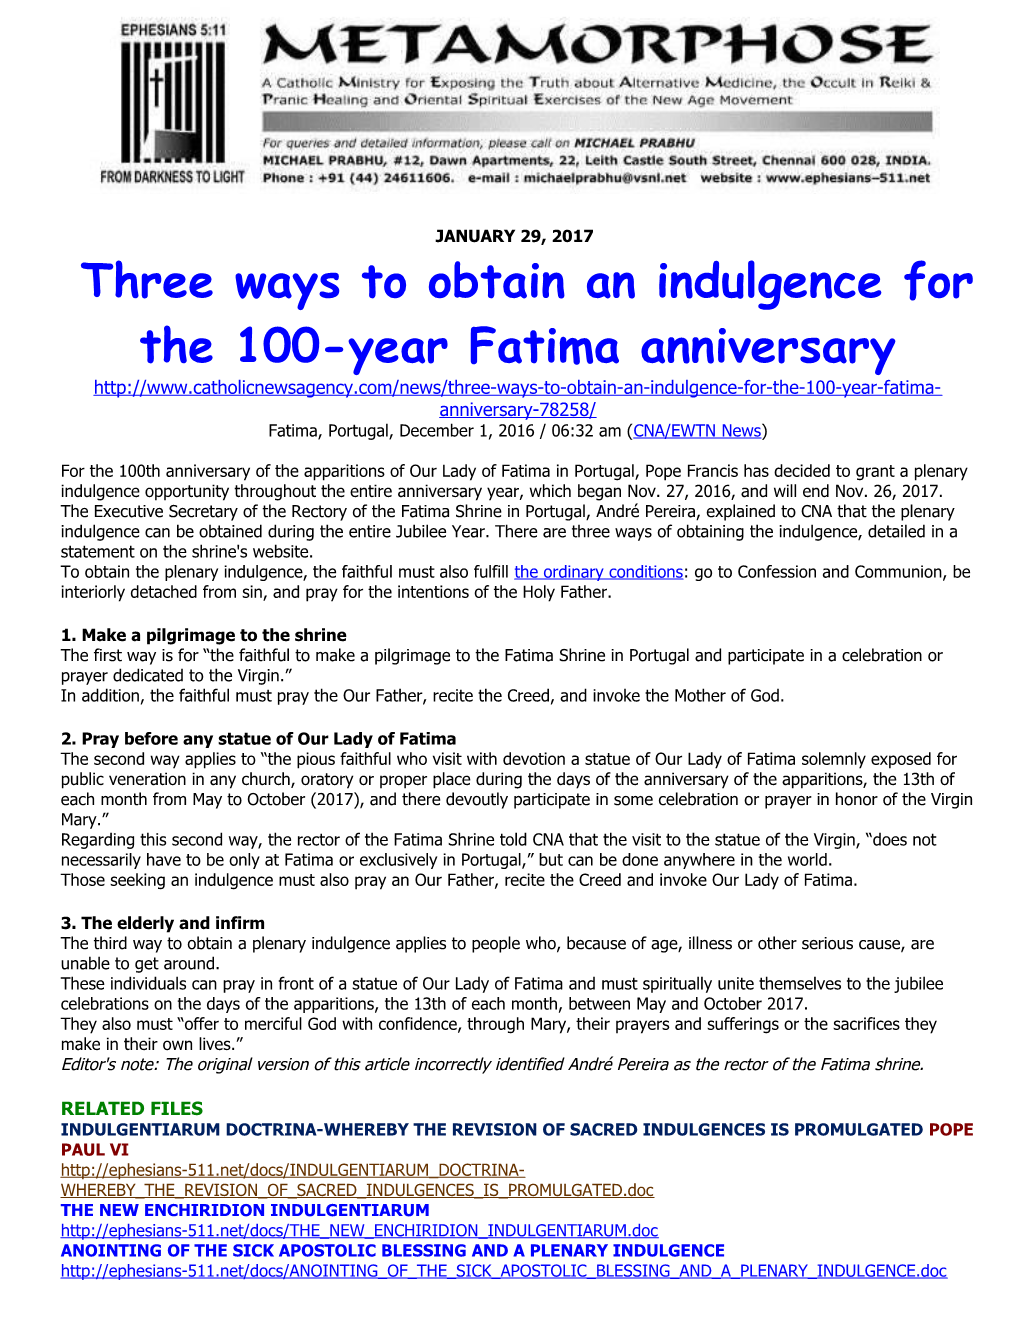 Three Ways to Obtain an Indulgence for the 100-Year Fatima Anniversary